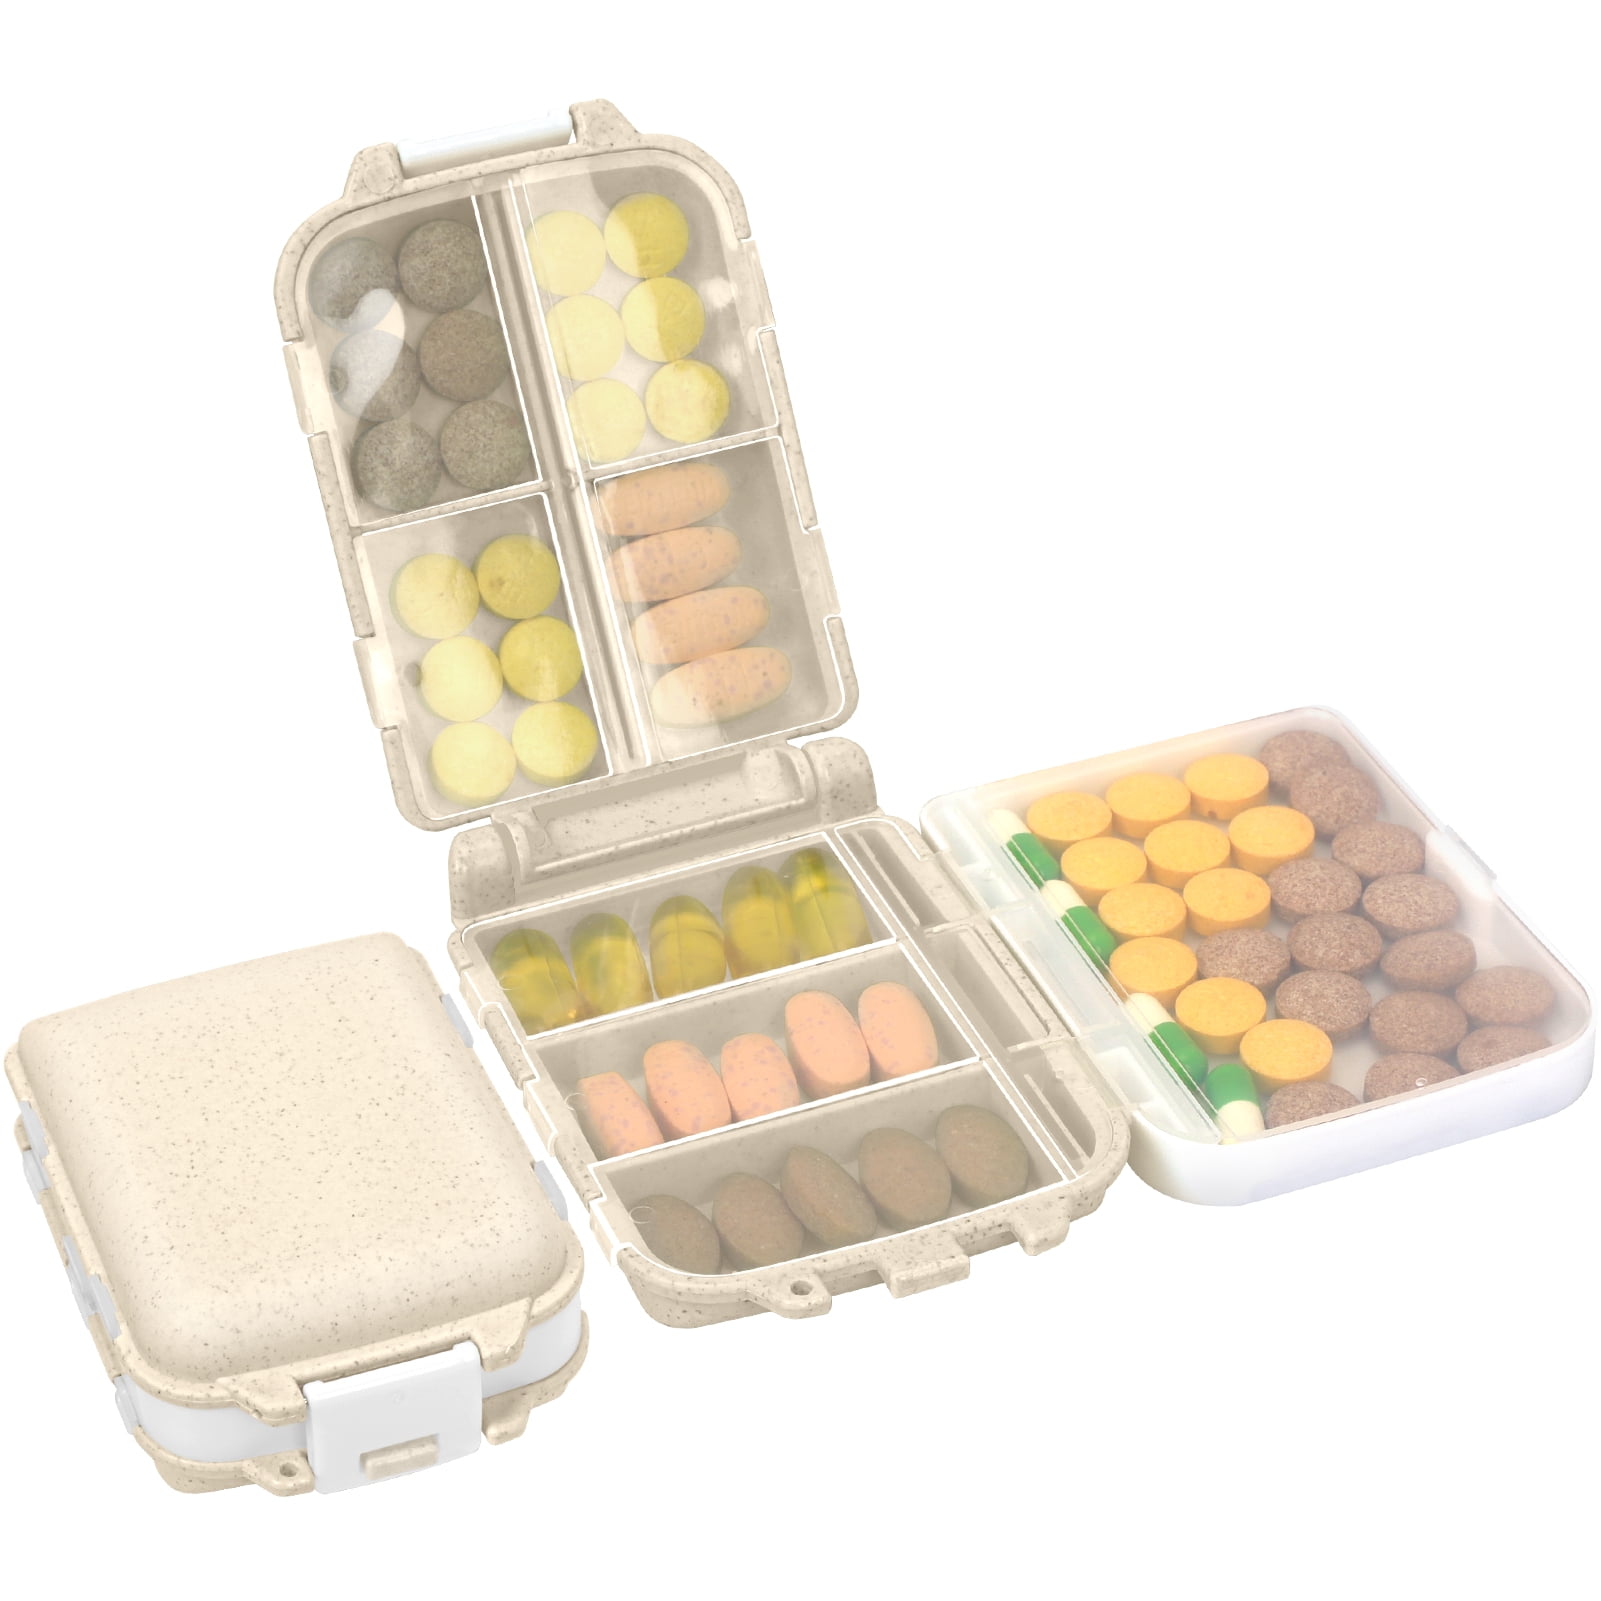 Sunbaca Pill Organizer for Travel Weekly Pill Box 7 Day Pill Case